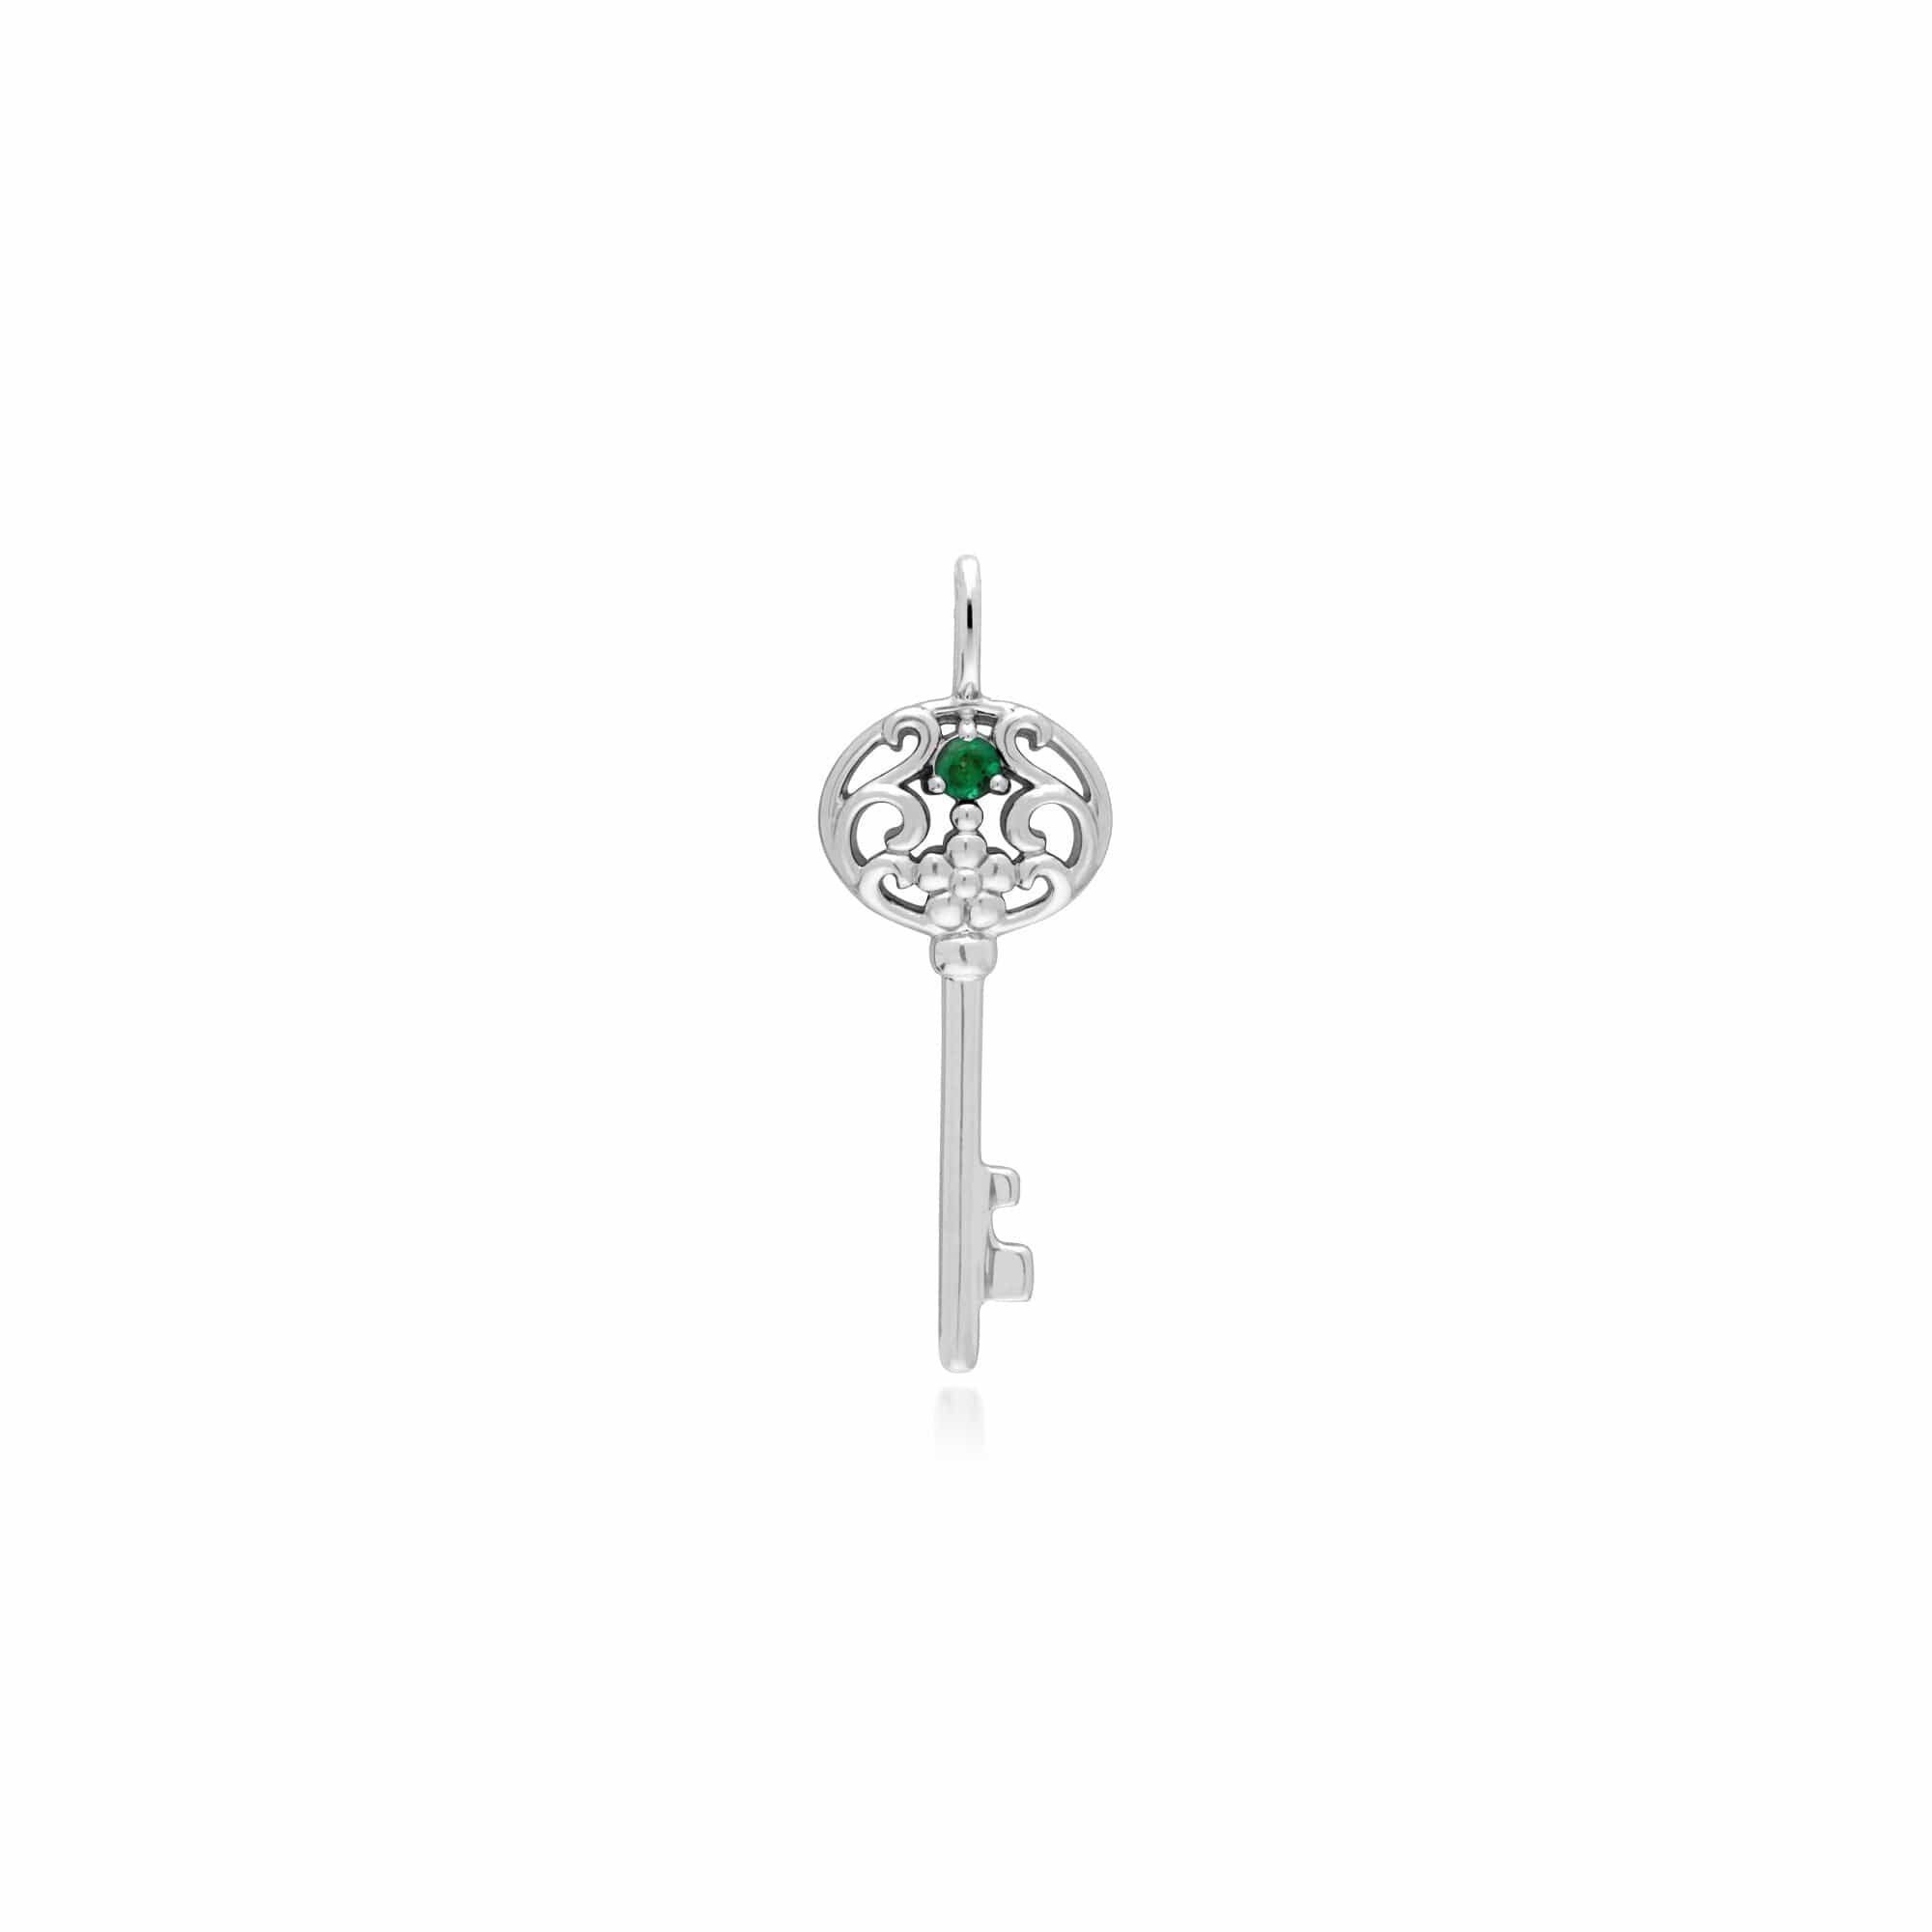 270P026807925-270P026601925 Classic Swirl Heart Lock Pendant & Emerald Big Key Charm in 925 Sterling Silver 2